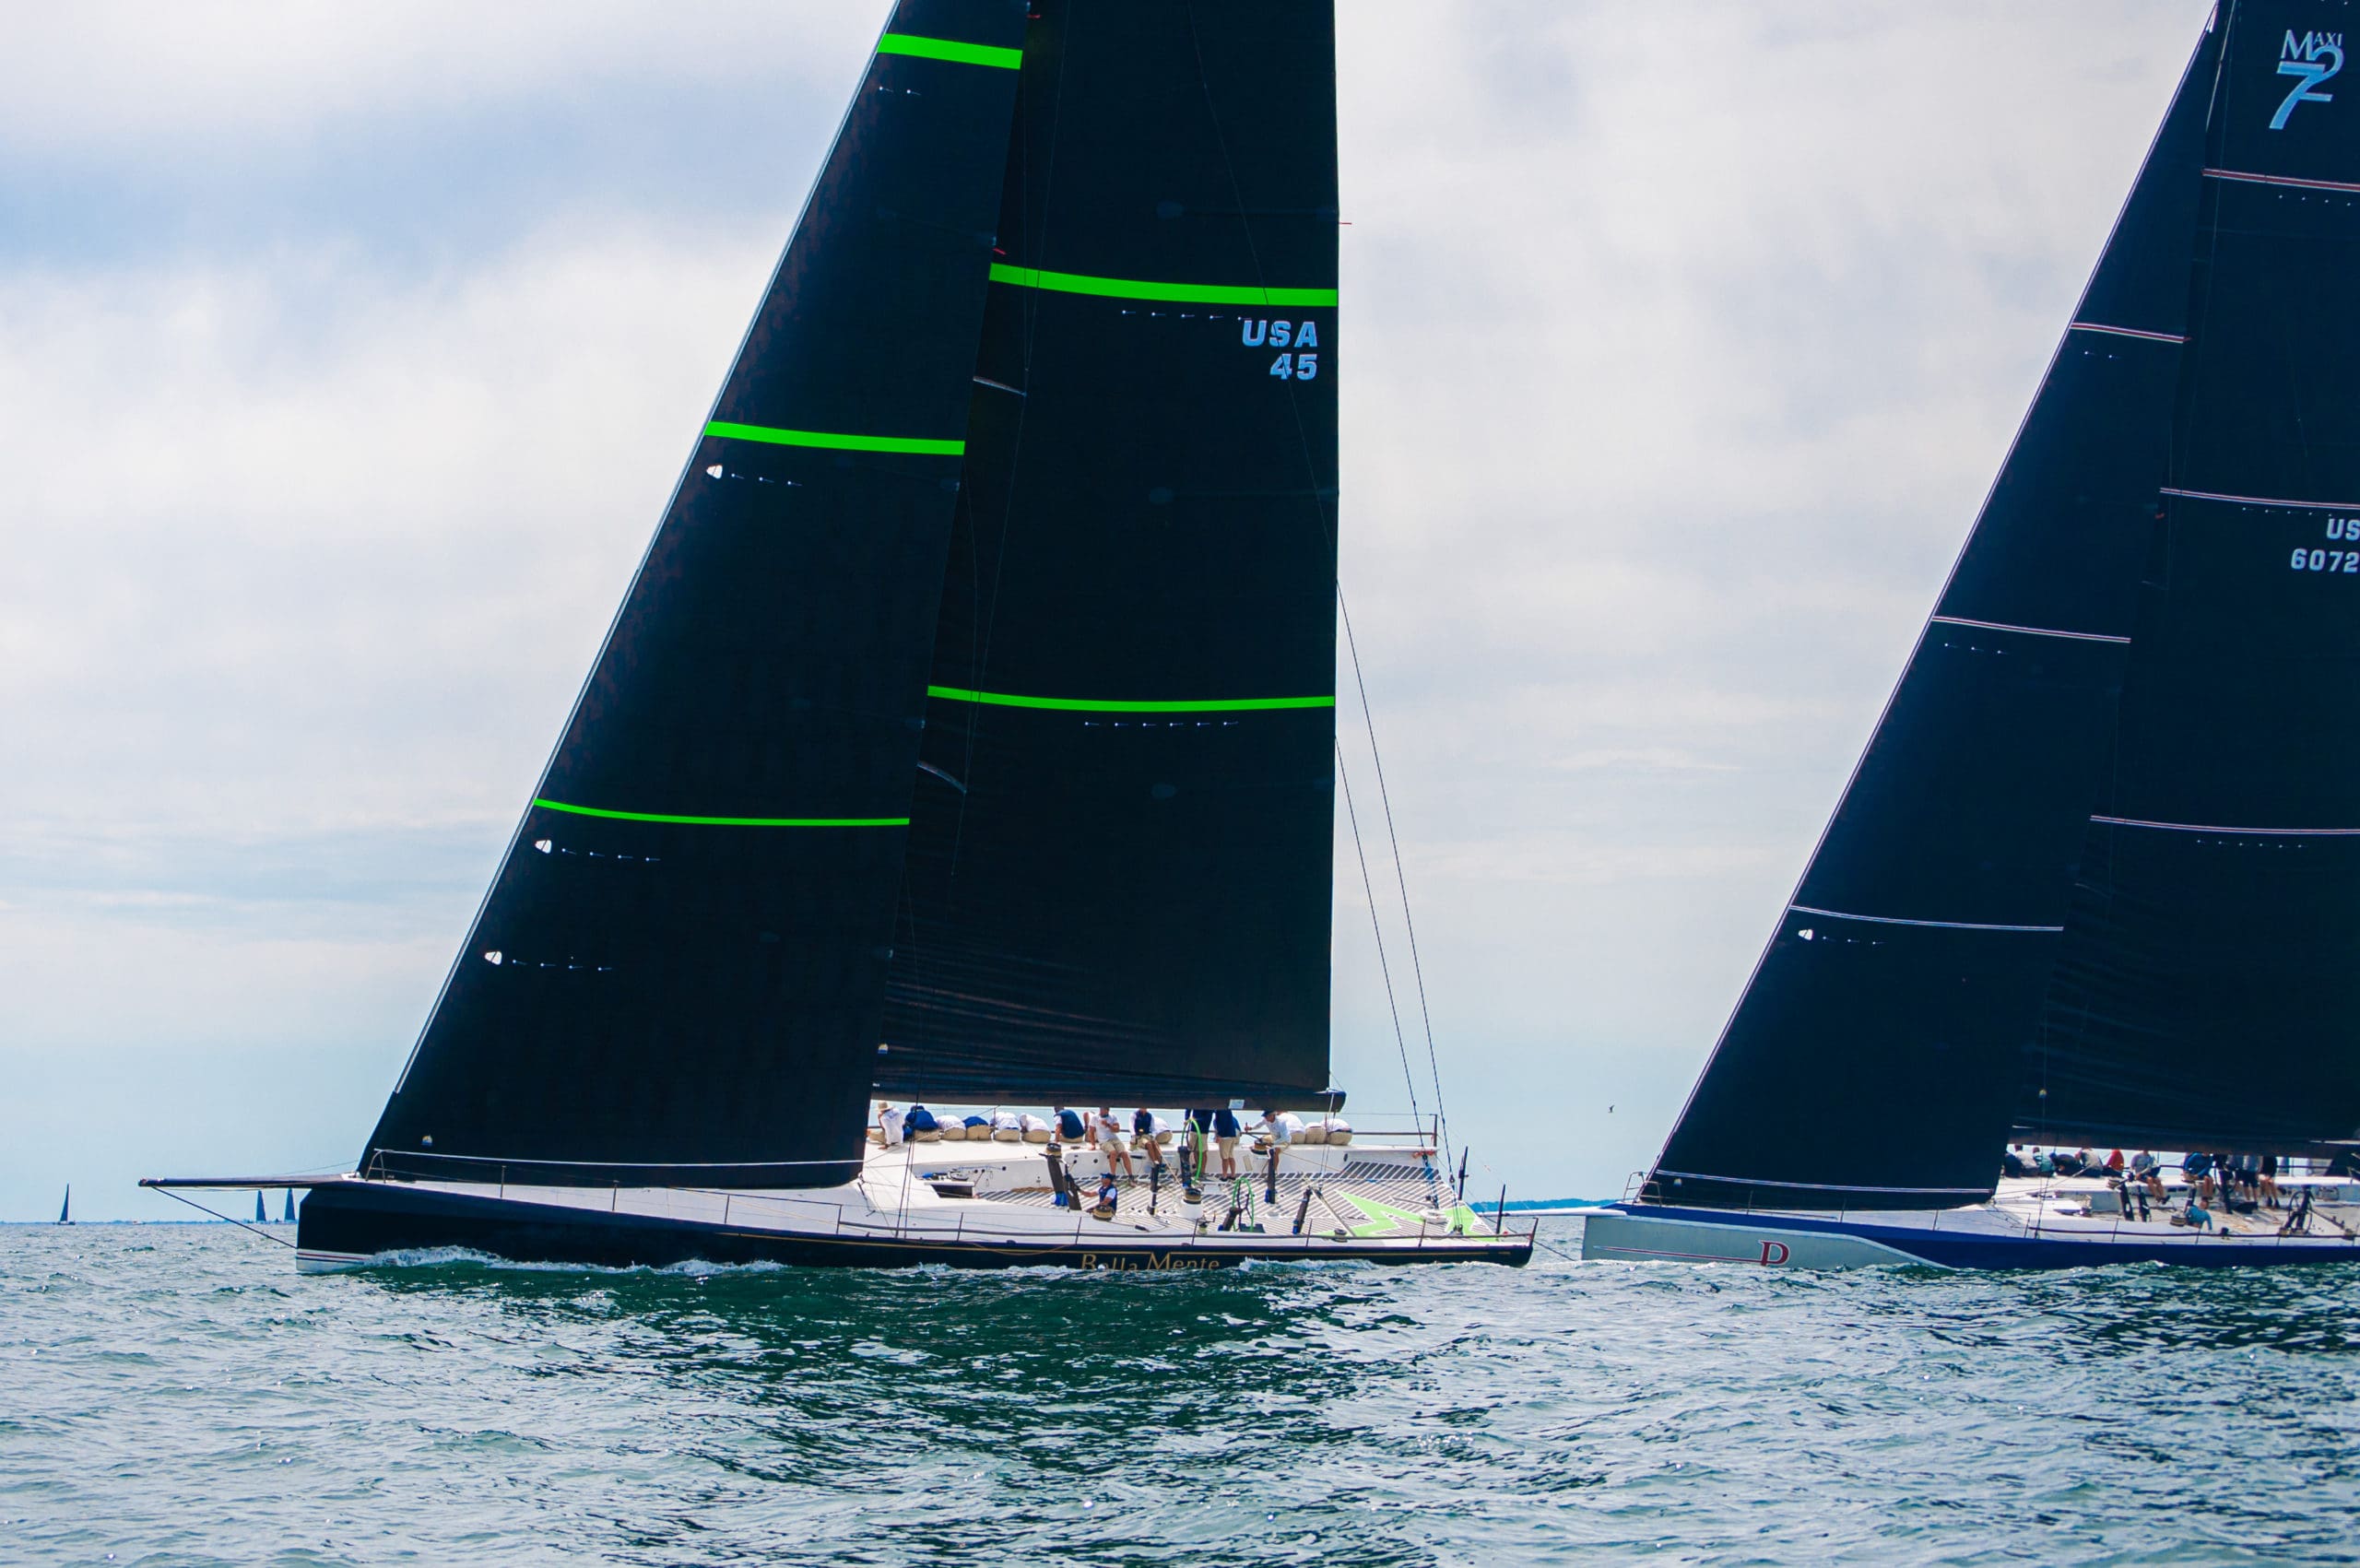 yacht scoring nyyc annual regatta